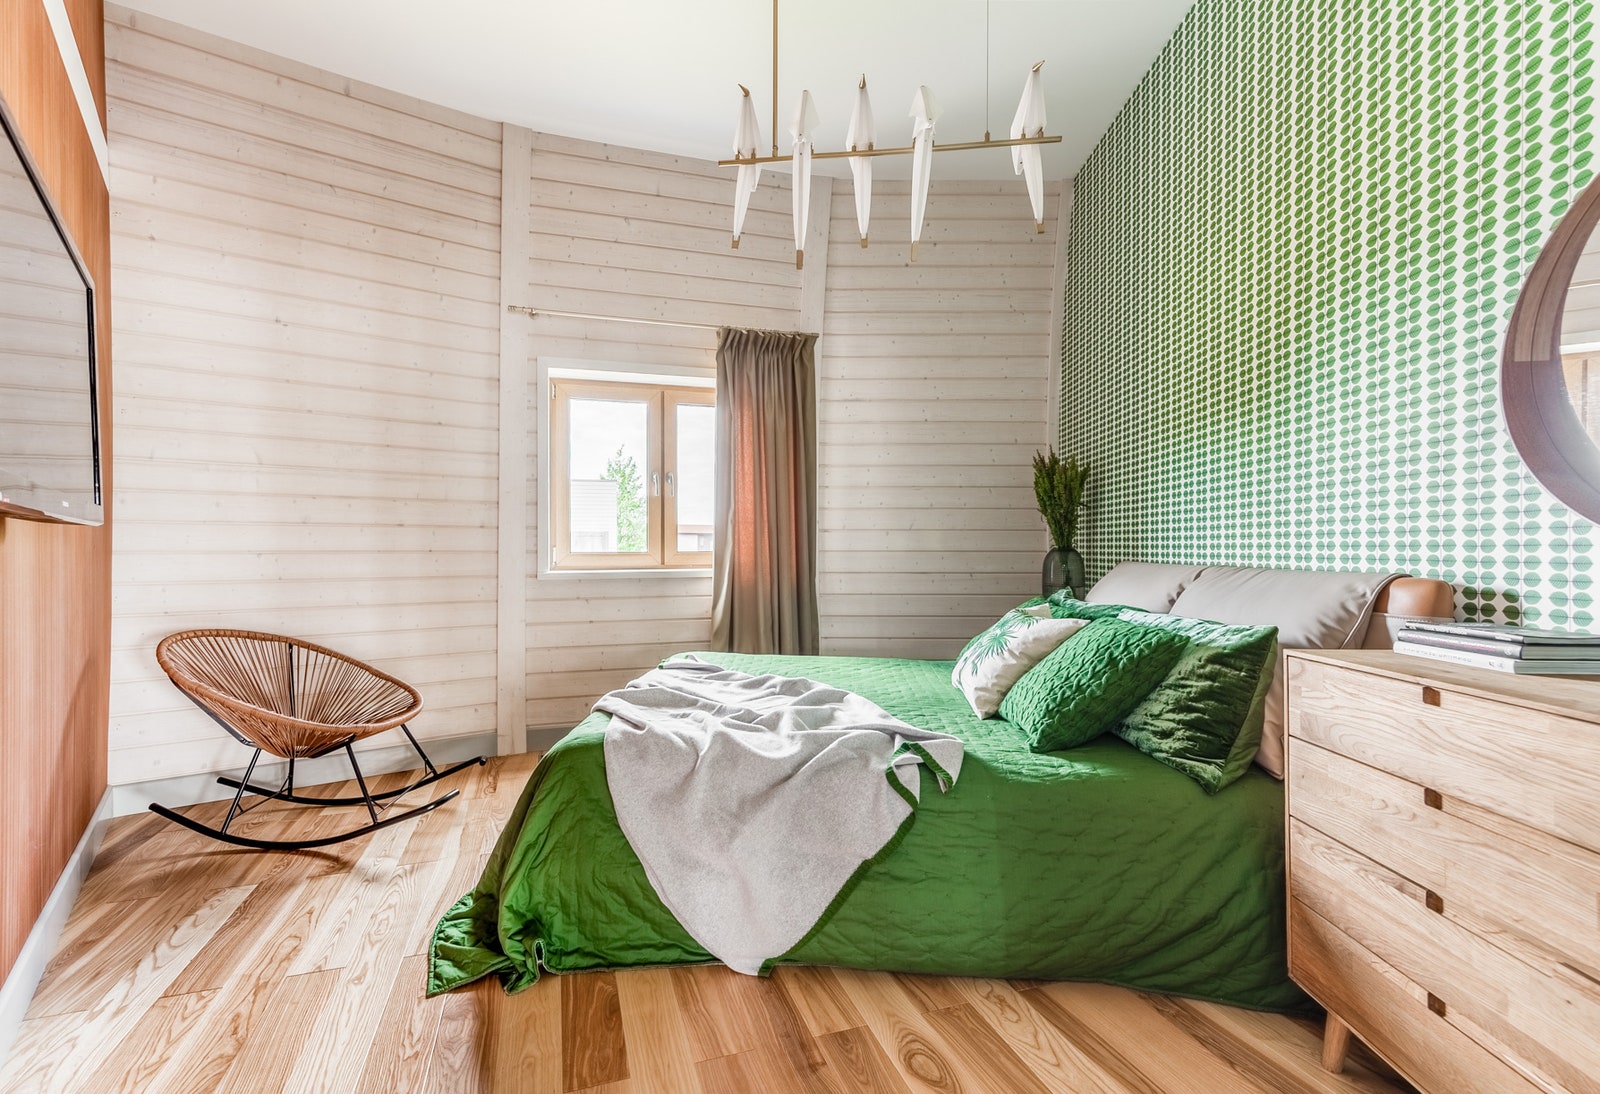 Гостевая комната. Кровать Poltrona Frau светильник Moooi обои Boråstapeter шторы Mobile Art текстиль Krassky.